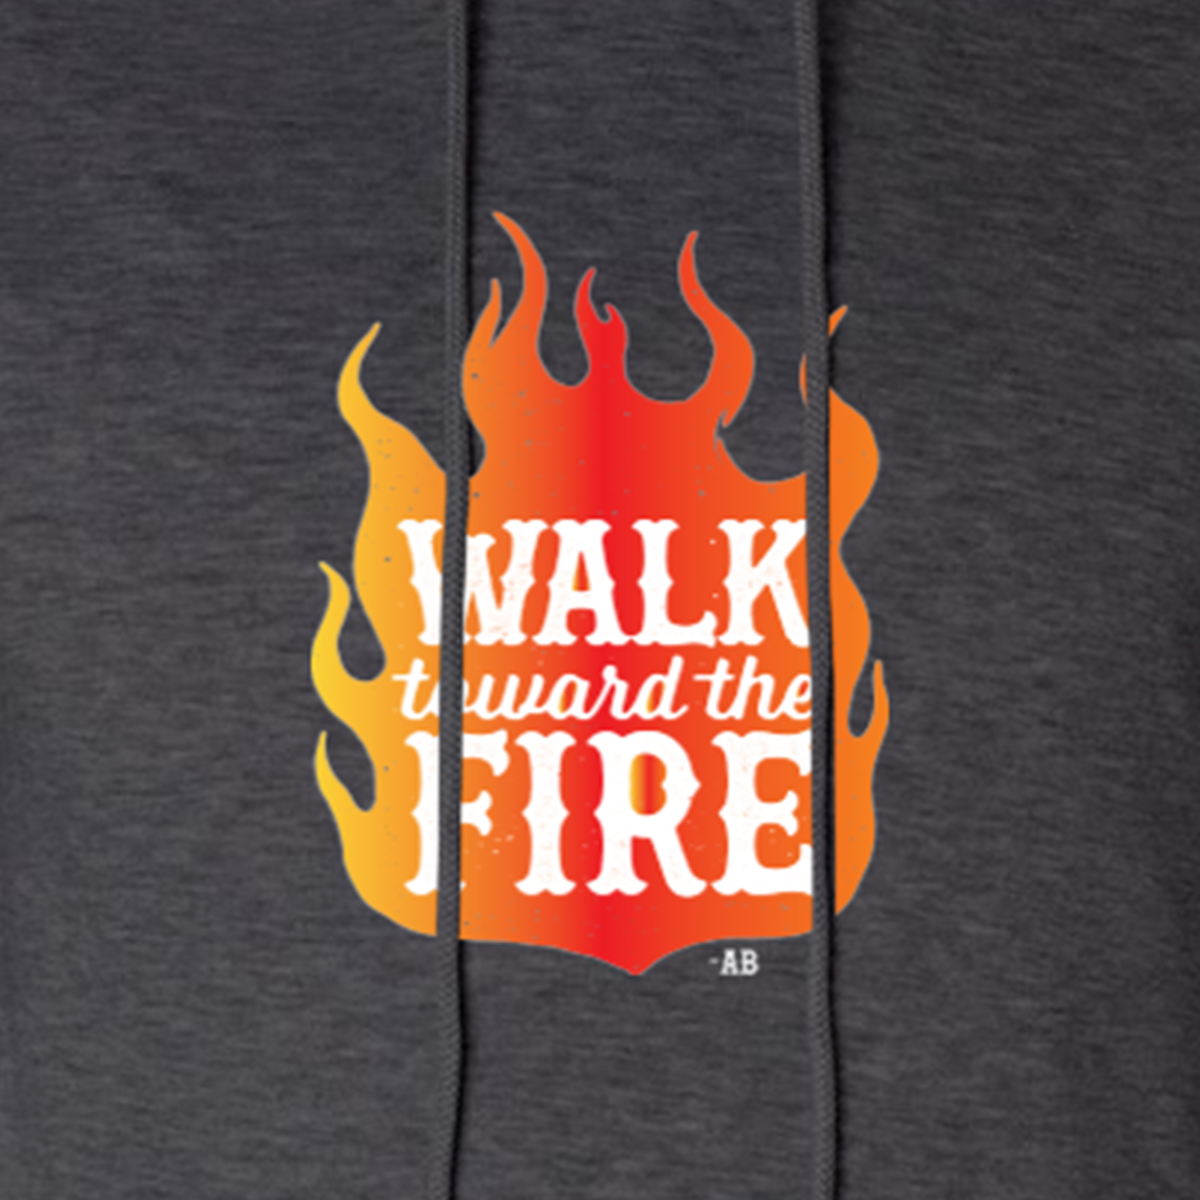 Walk Toward the Fire Hoodie Sweatshirt